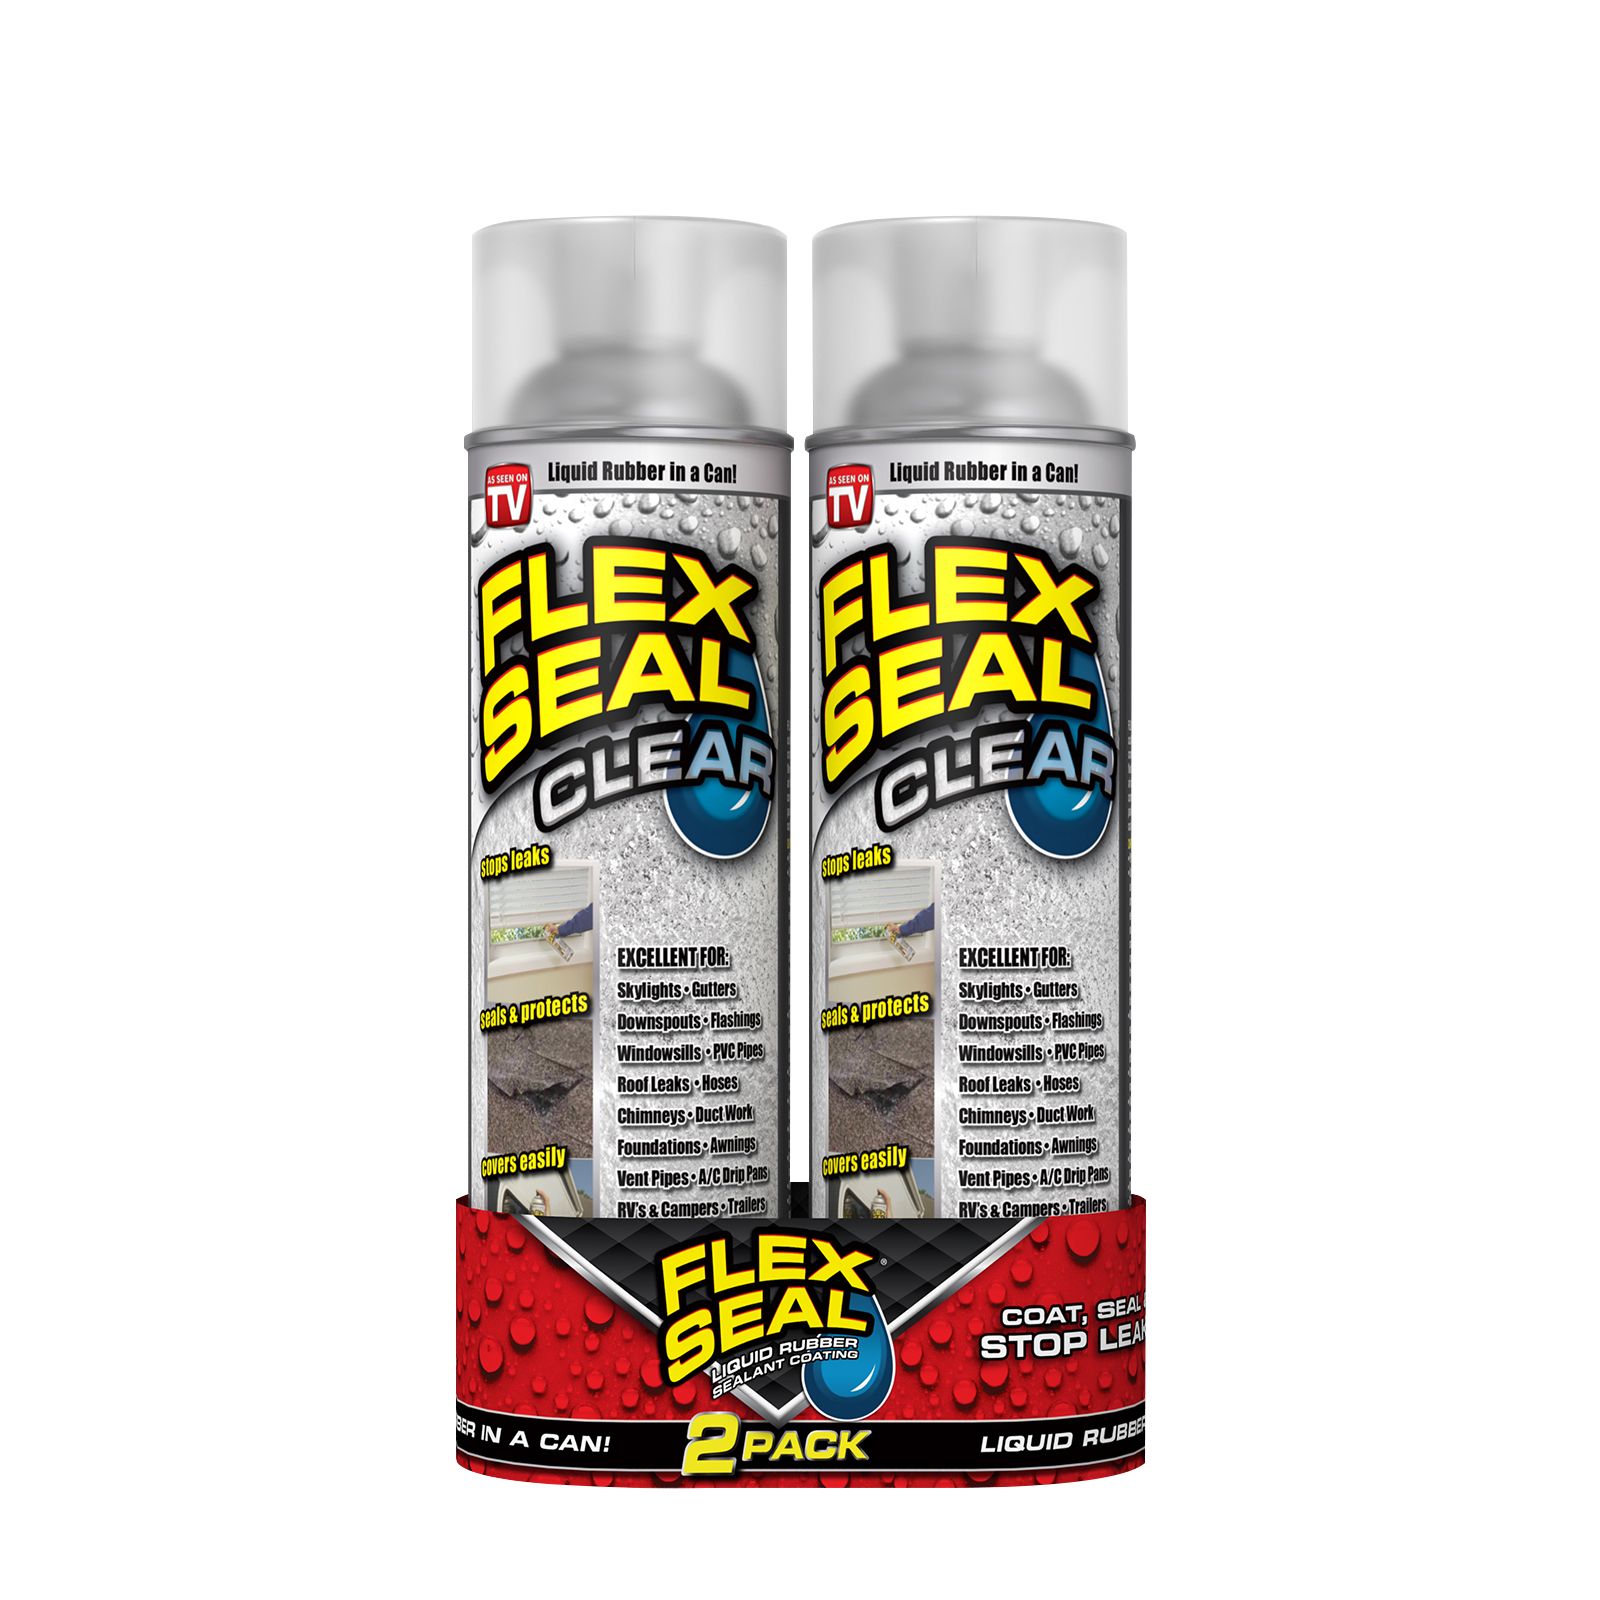 Leak Stopper Rubber Flexx Sealant, 18 oz. 